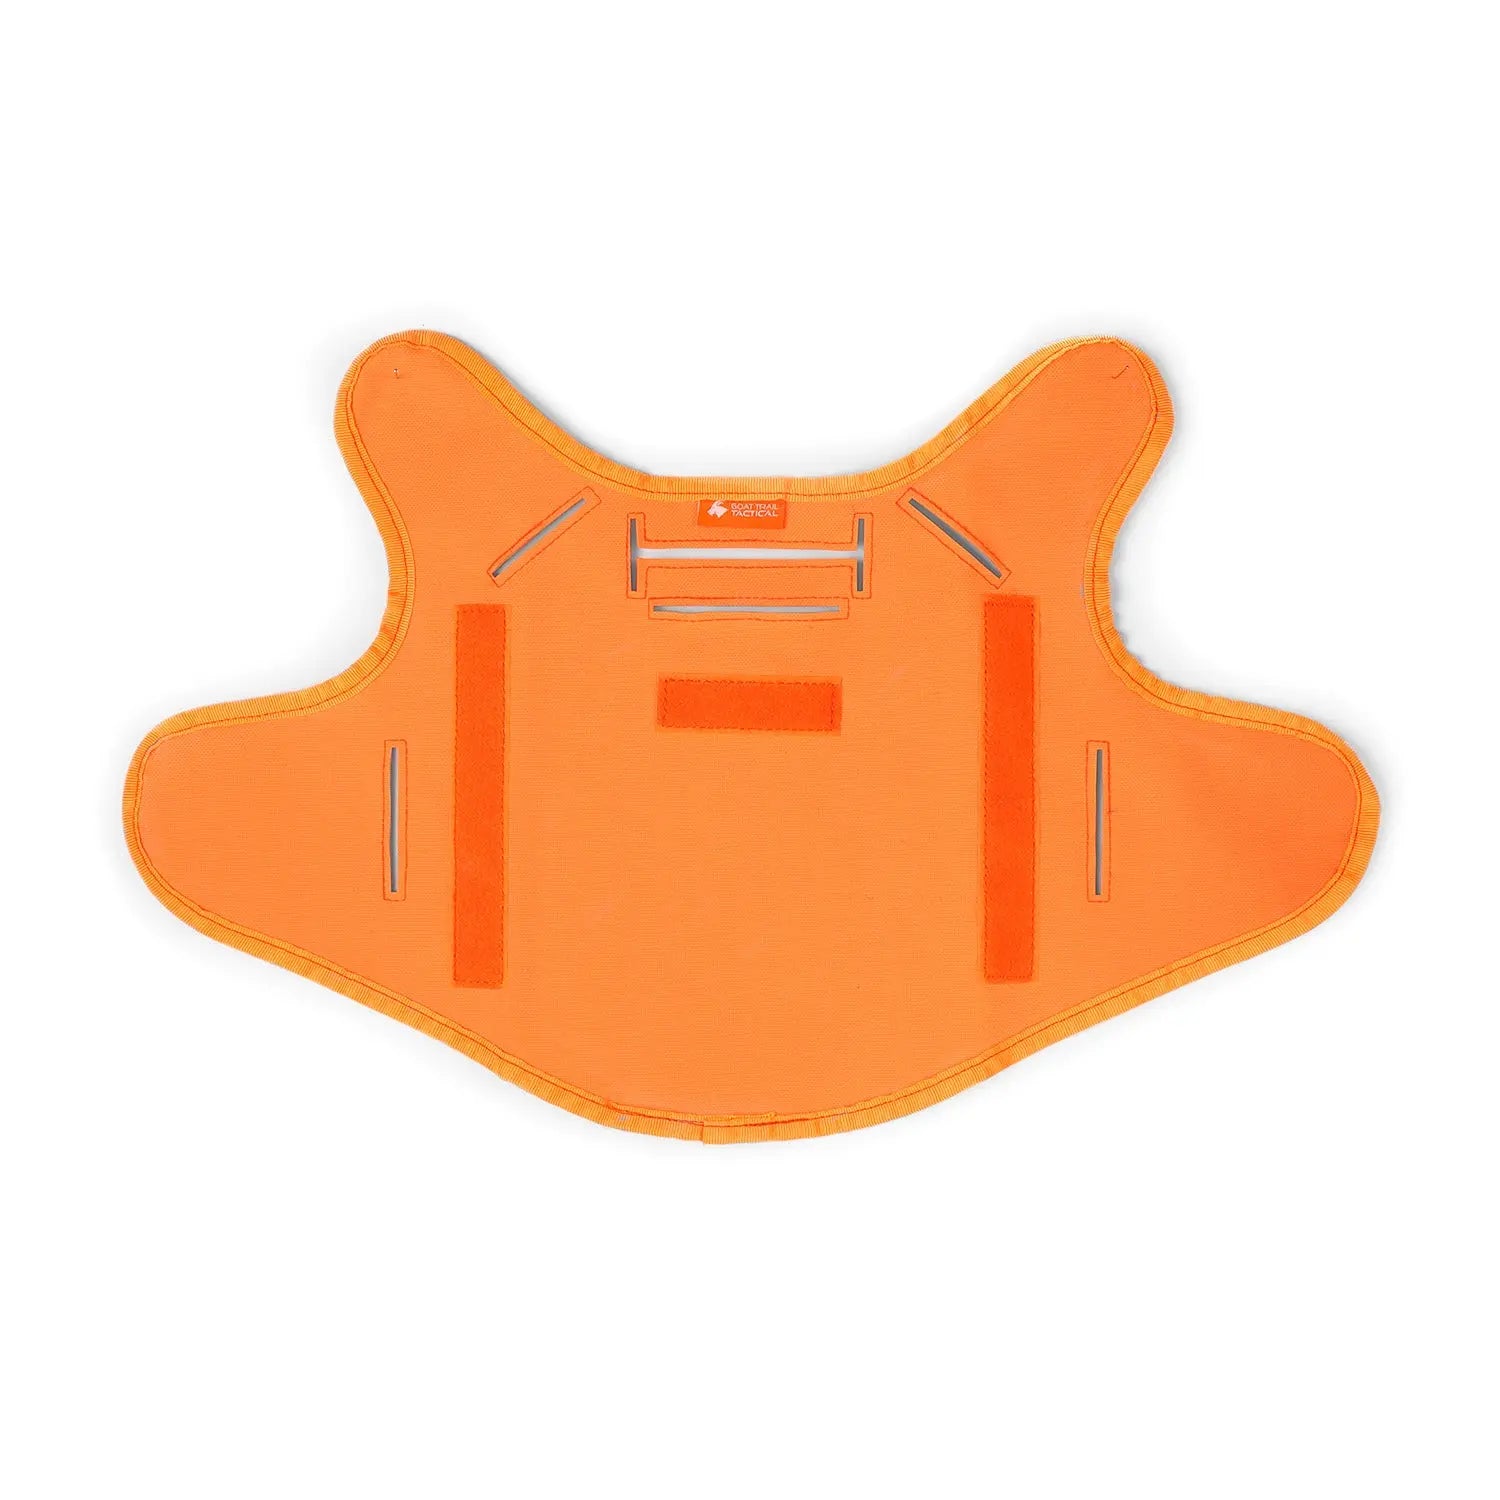 GTT Harness Cape - Hi Visibility Orange - Cape Only Goat Trail Tactical